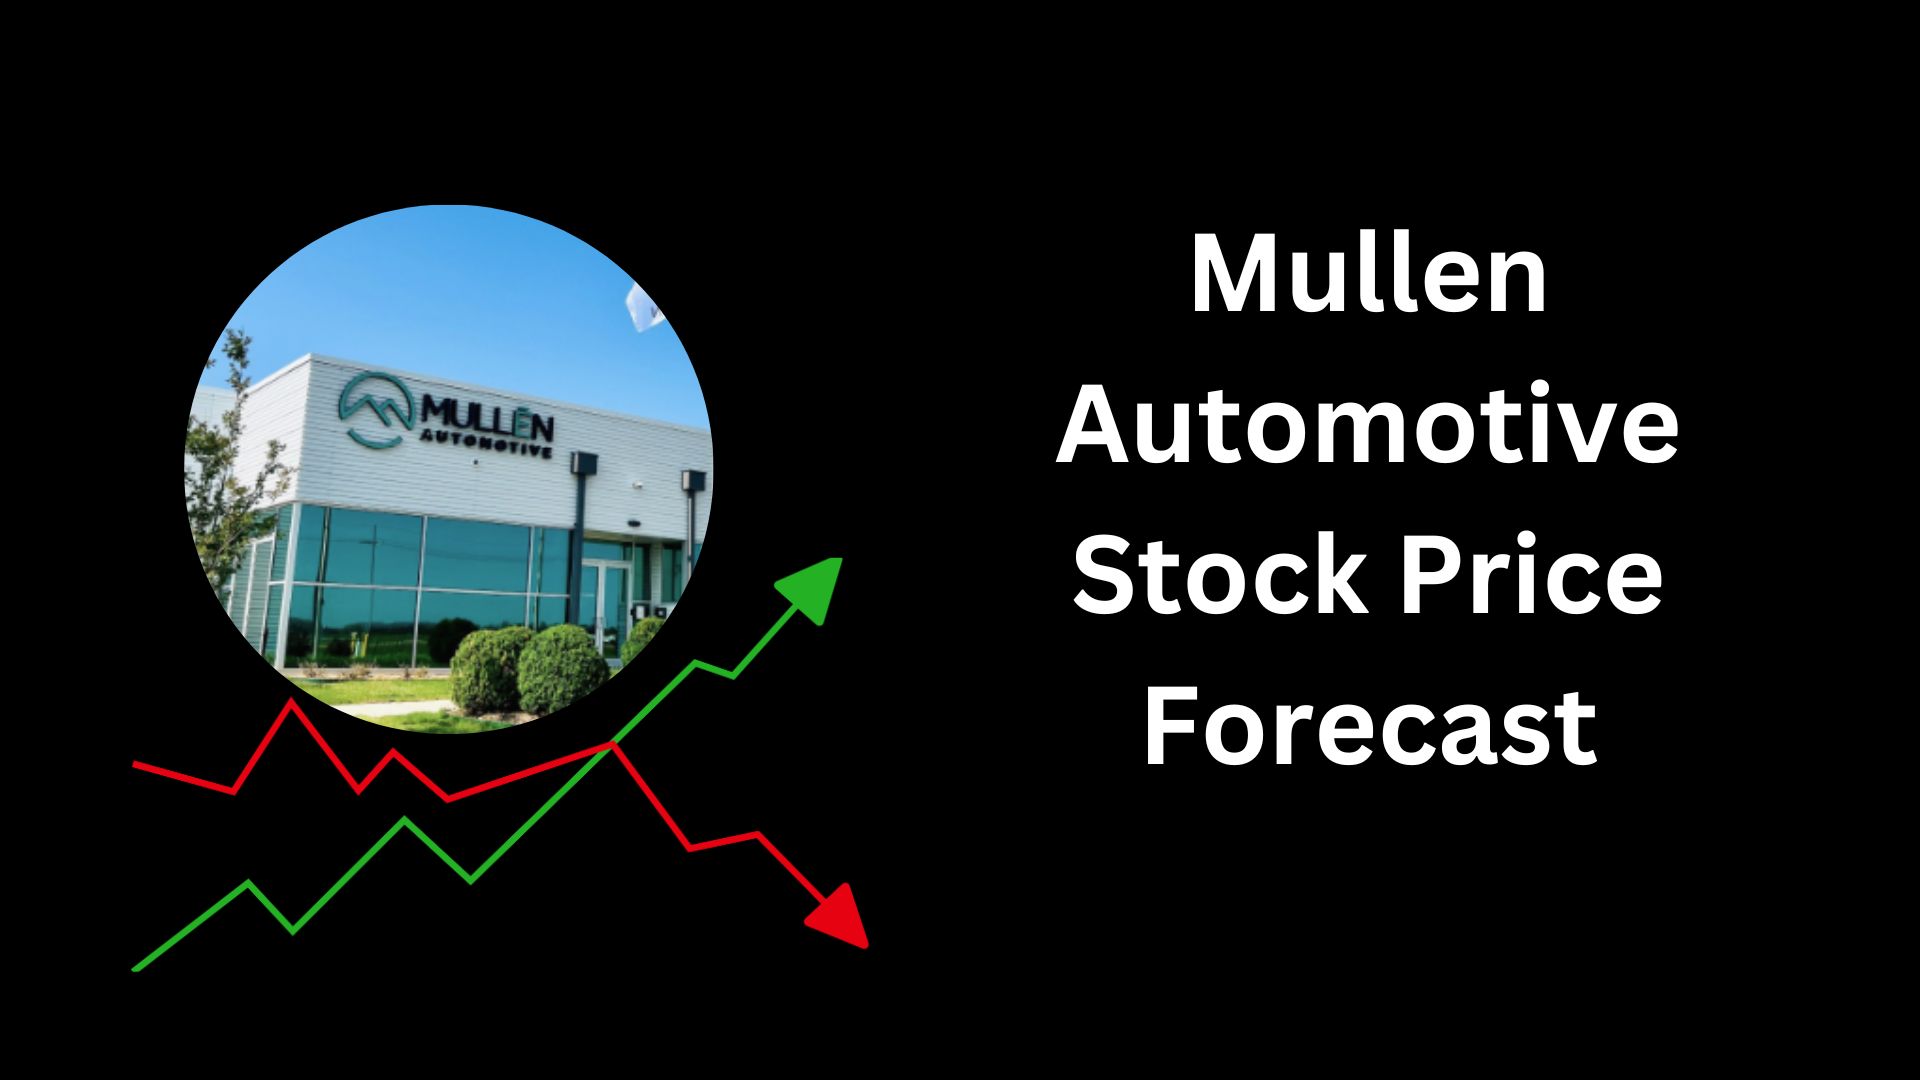 Mullen Automotive Stock Price Forecast